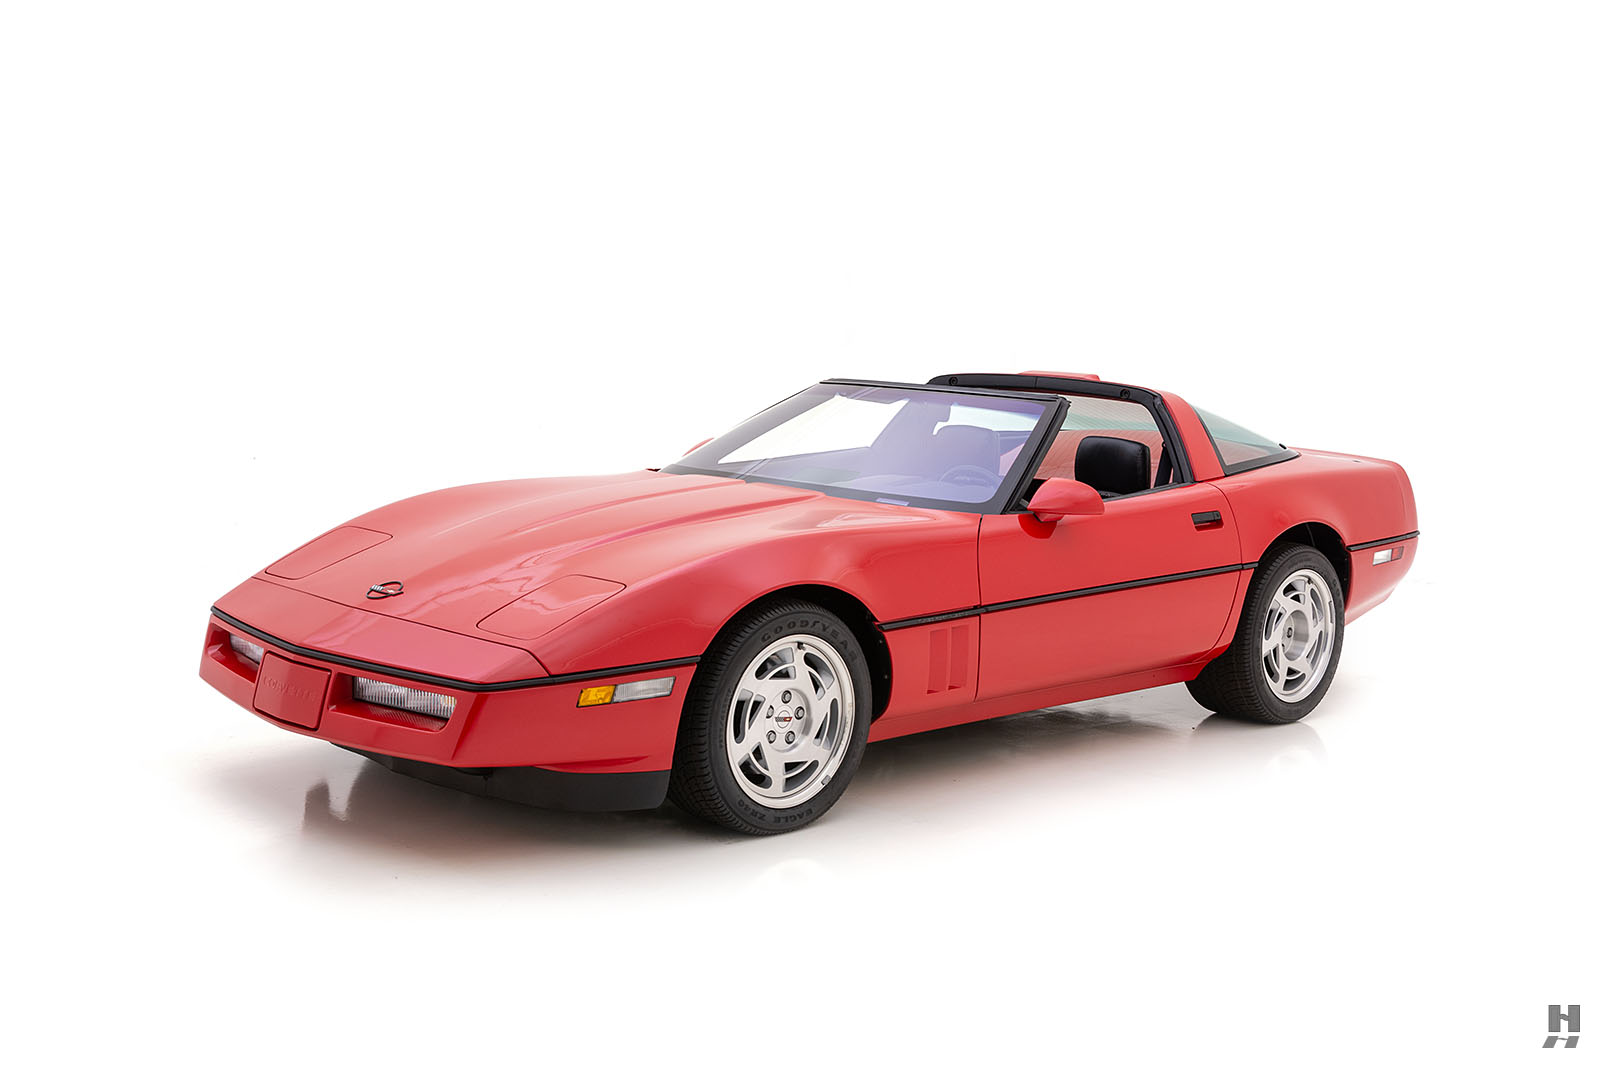 Discover the 1984 Chevy Corvette's Classic Value